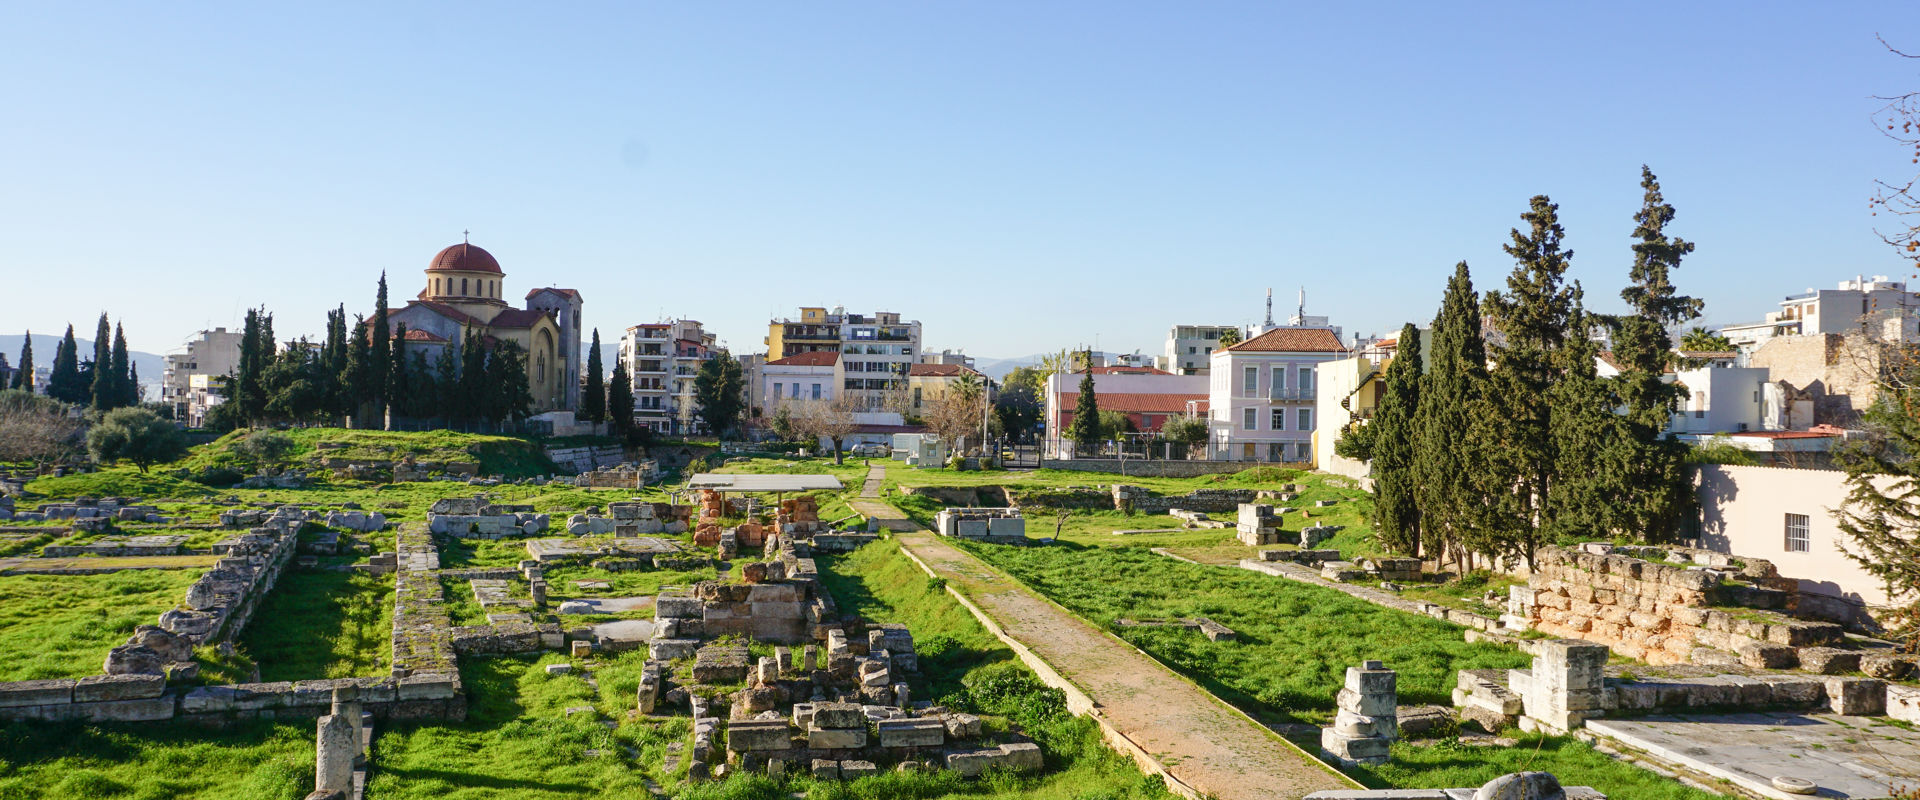 The ancient cemetery of Keramikos